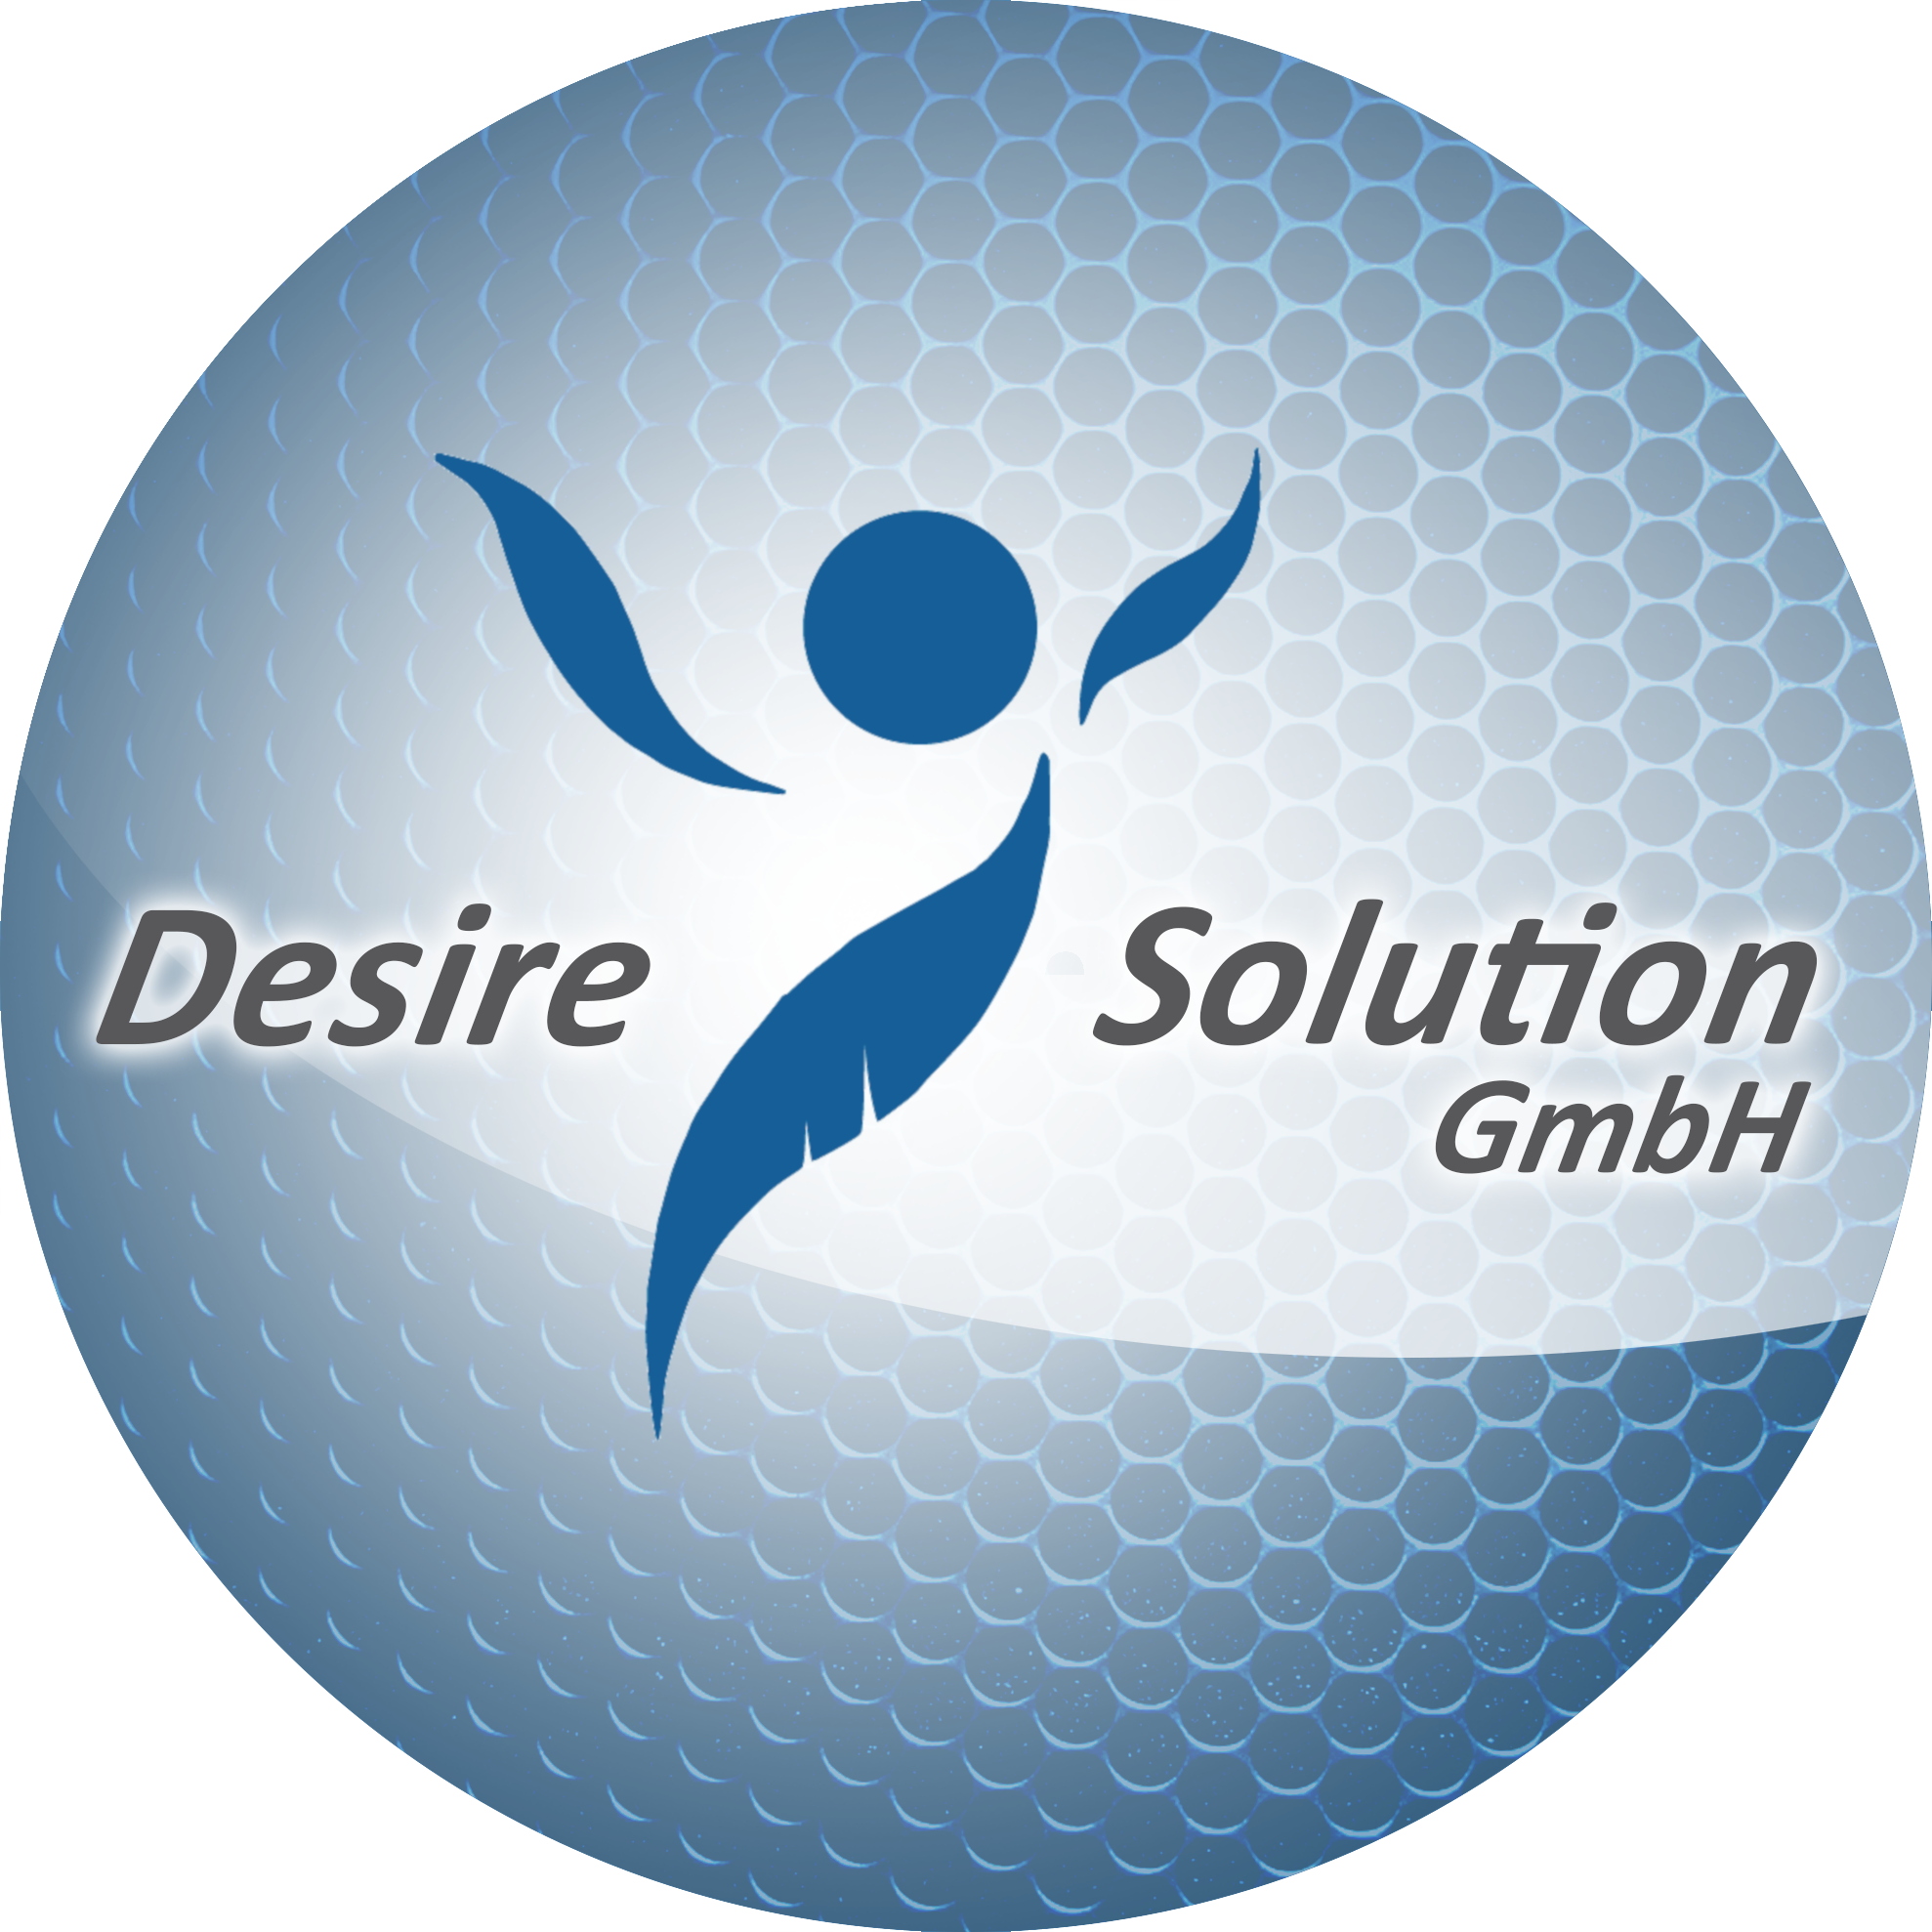 Desire Solution GmbH